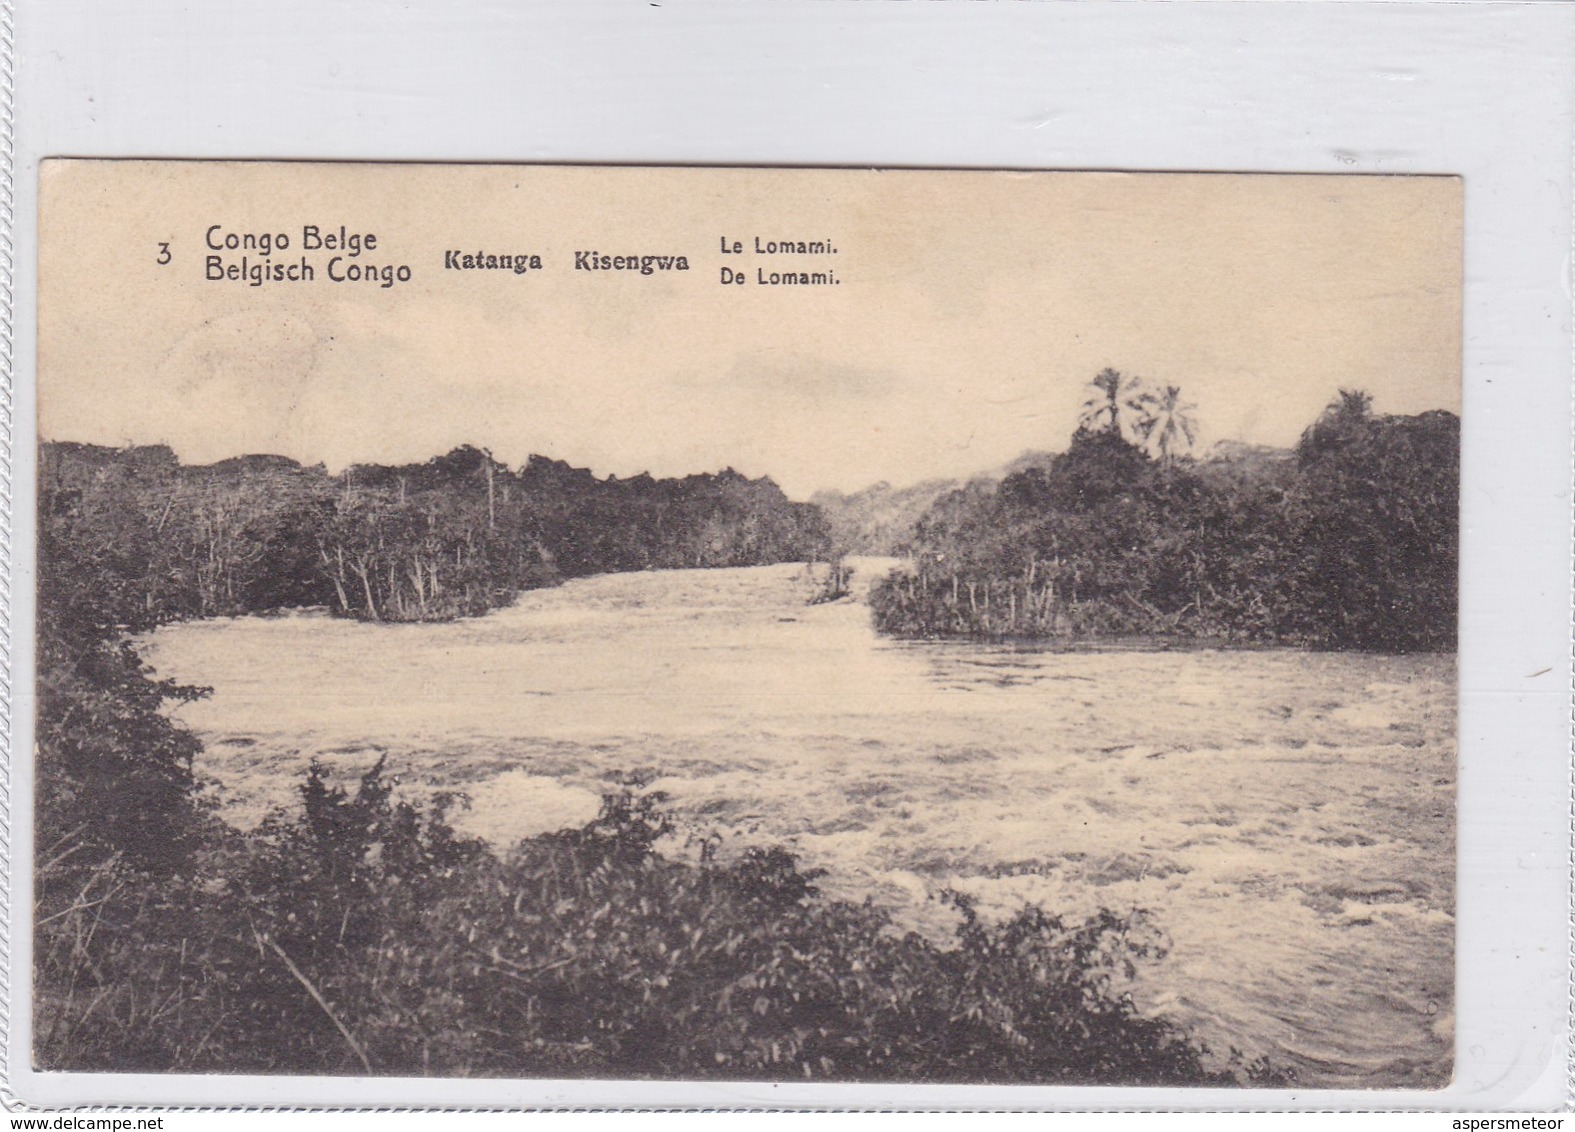 CONGO BELGE. KATANGA KISENGWA. LE LOMAMI. CIRCULEE A BELGIQUE AN 1913 - BLEUP - Entiers Postaux